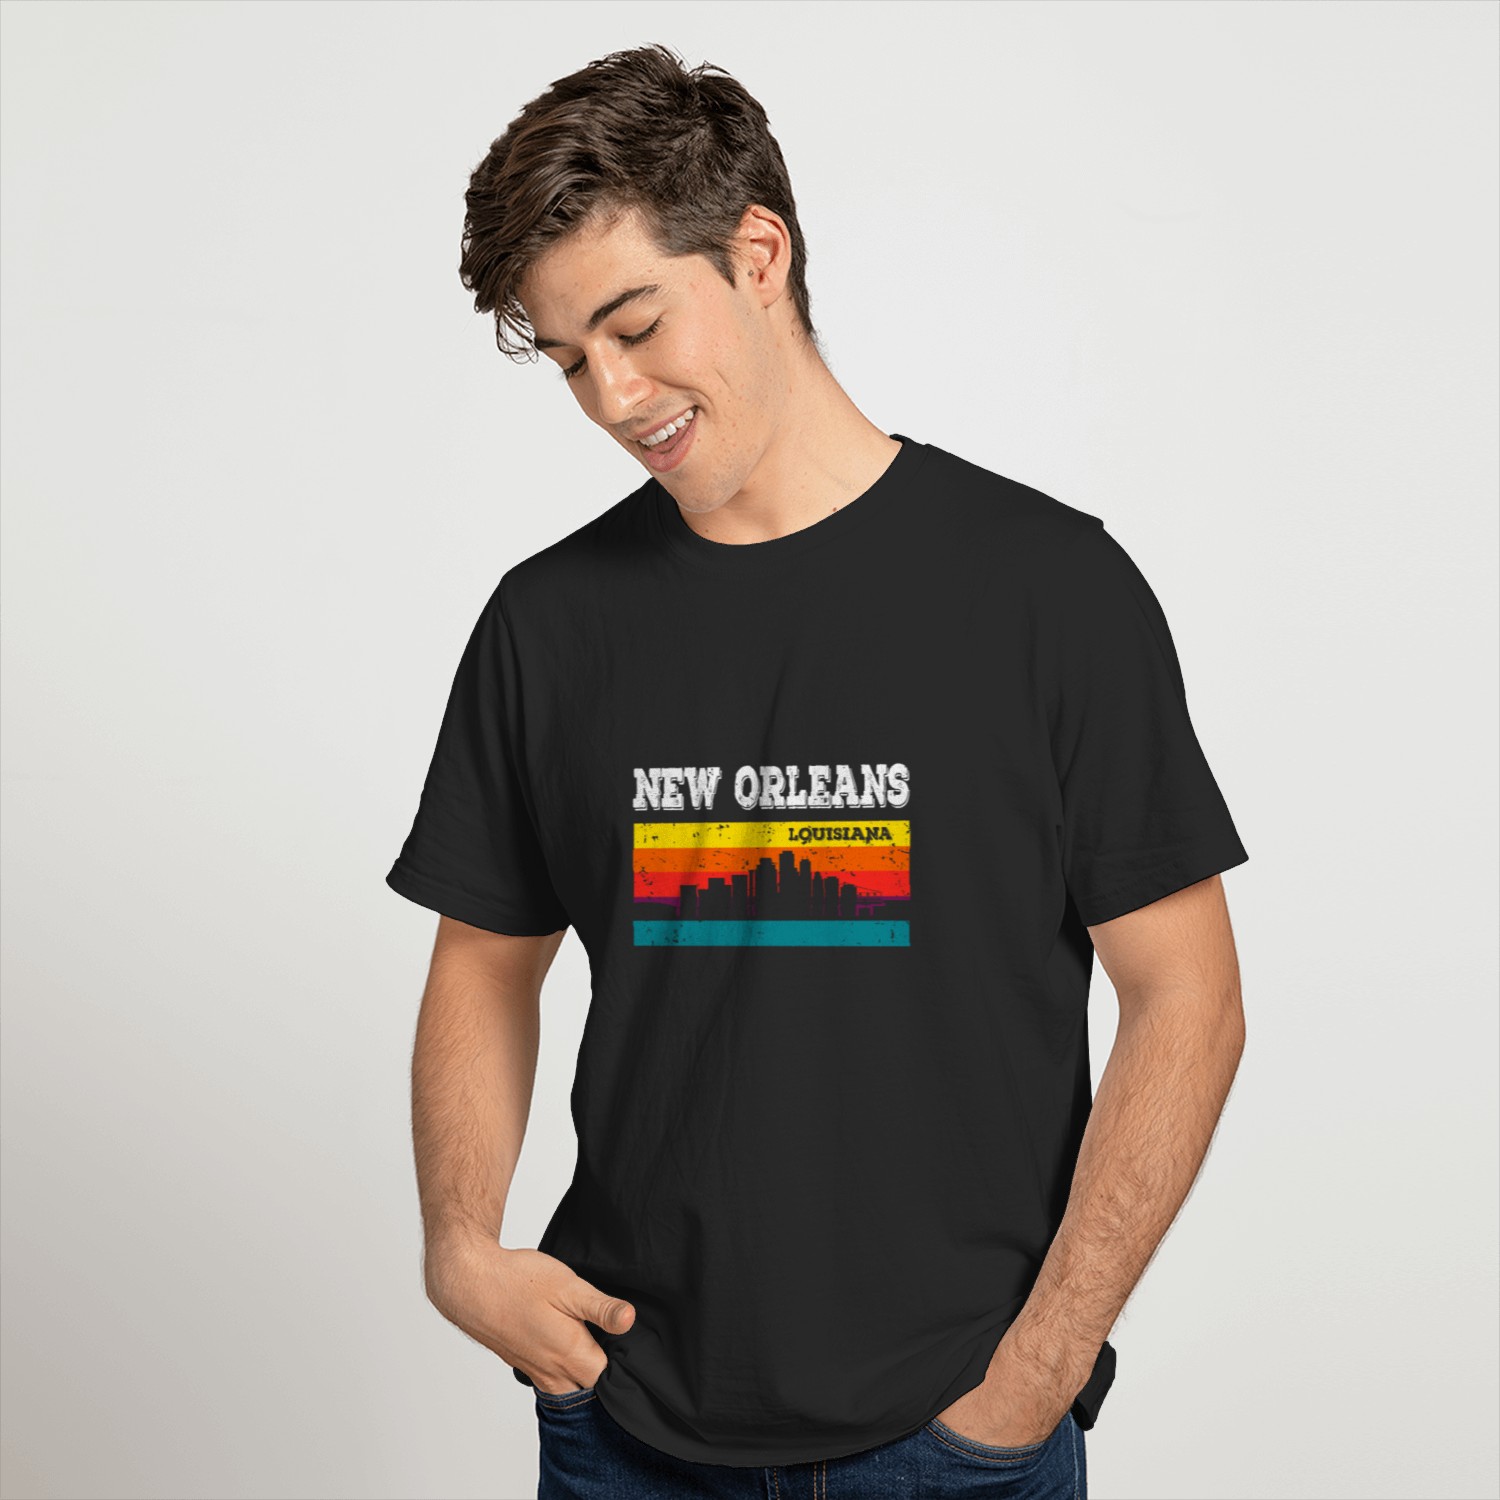 New Orleans Louisiana T-shirt